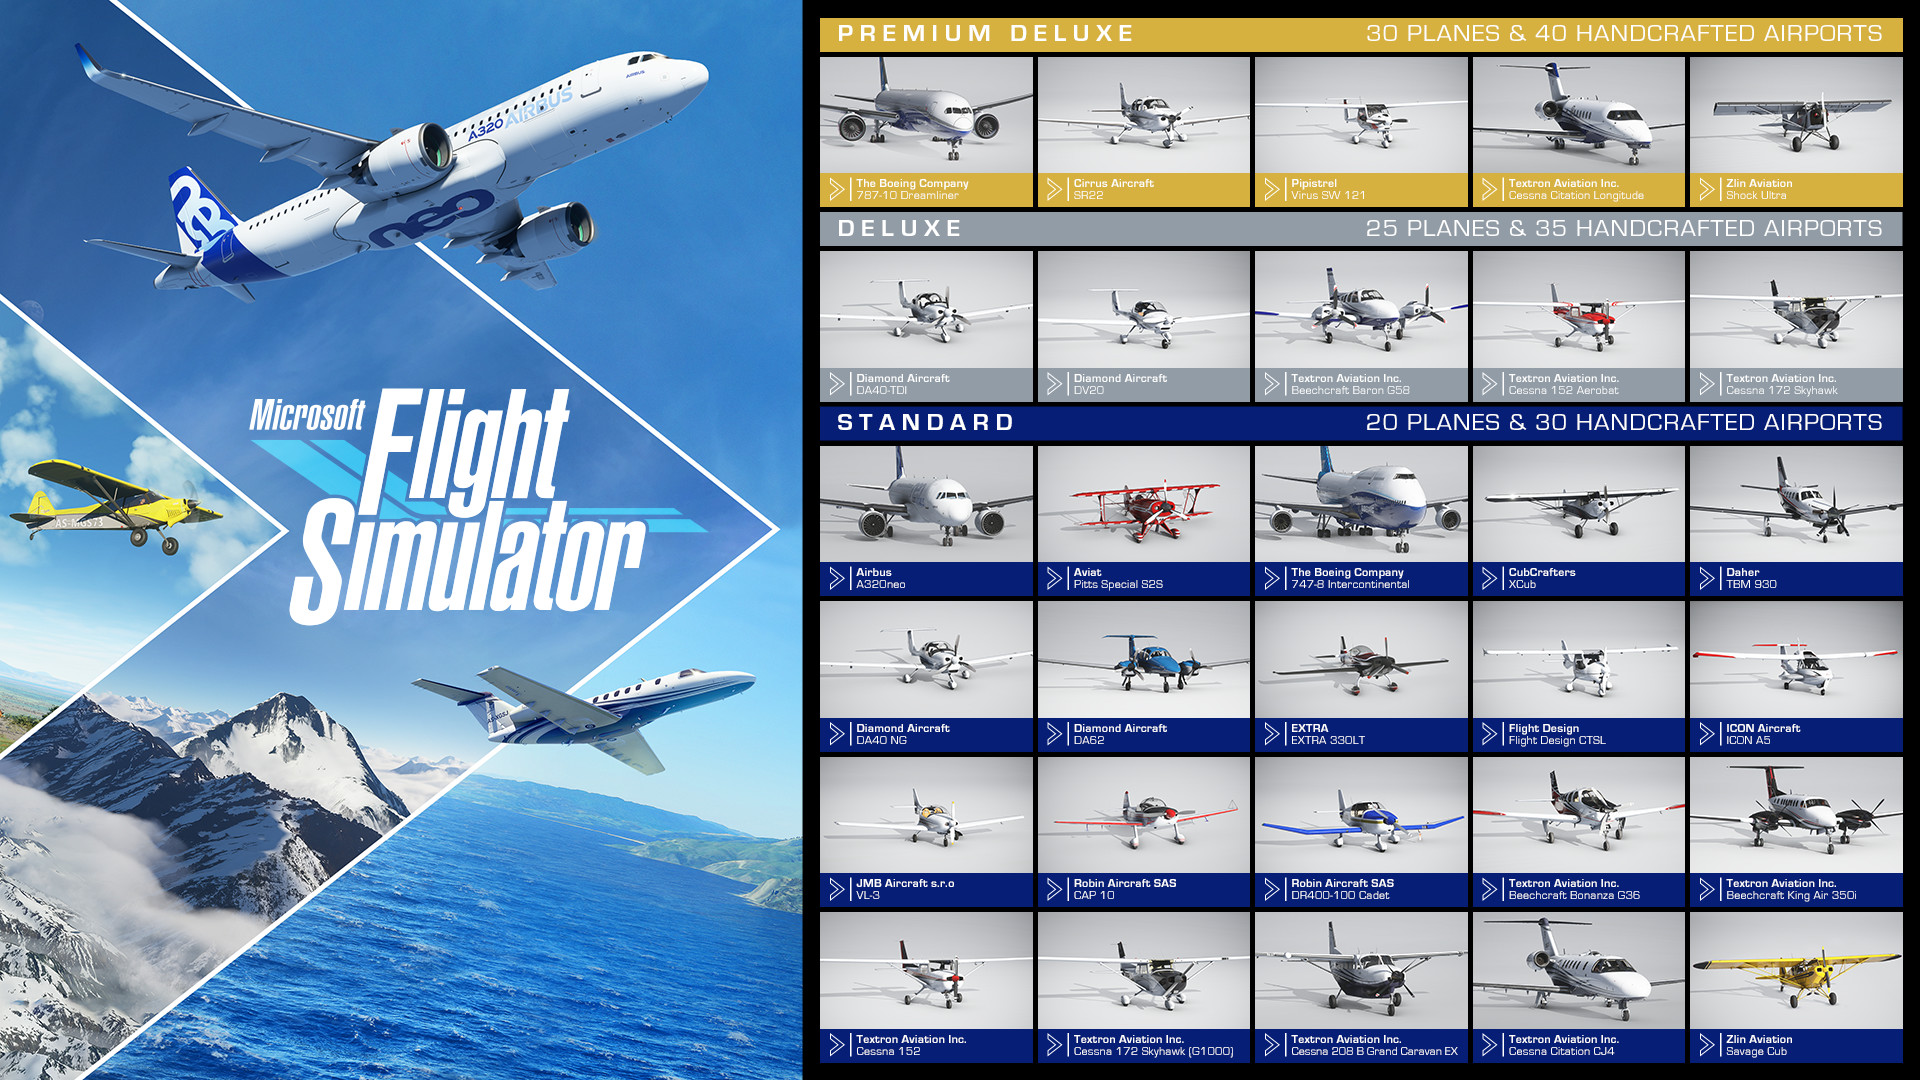 Microsoft Flight Simulator Premium Deluxe Game of the Year Edition EU Xbox Series X|S / Windows 10 CD Key 102.81 USD